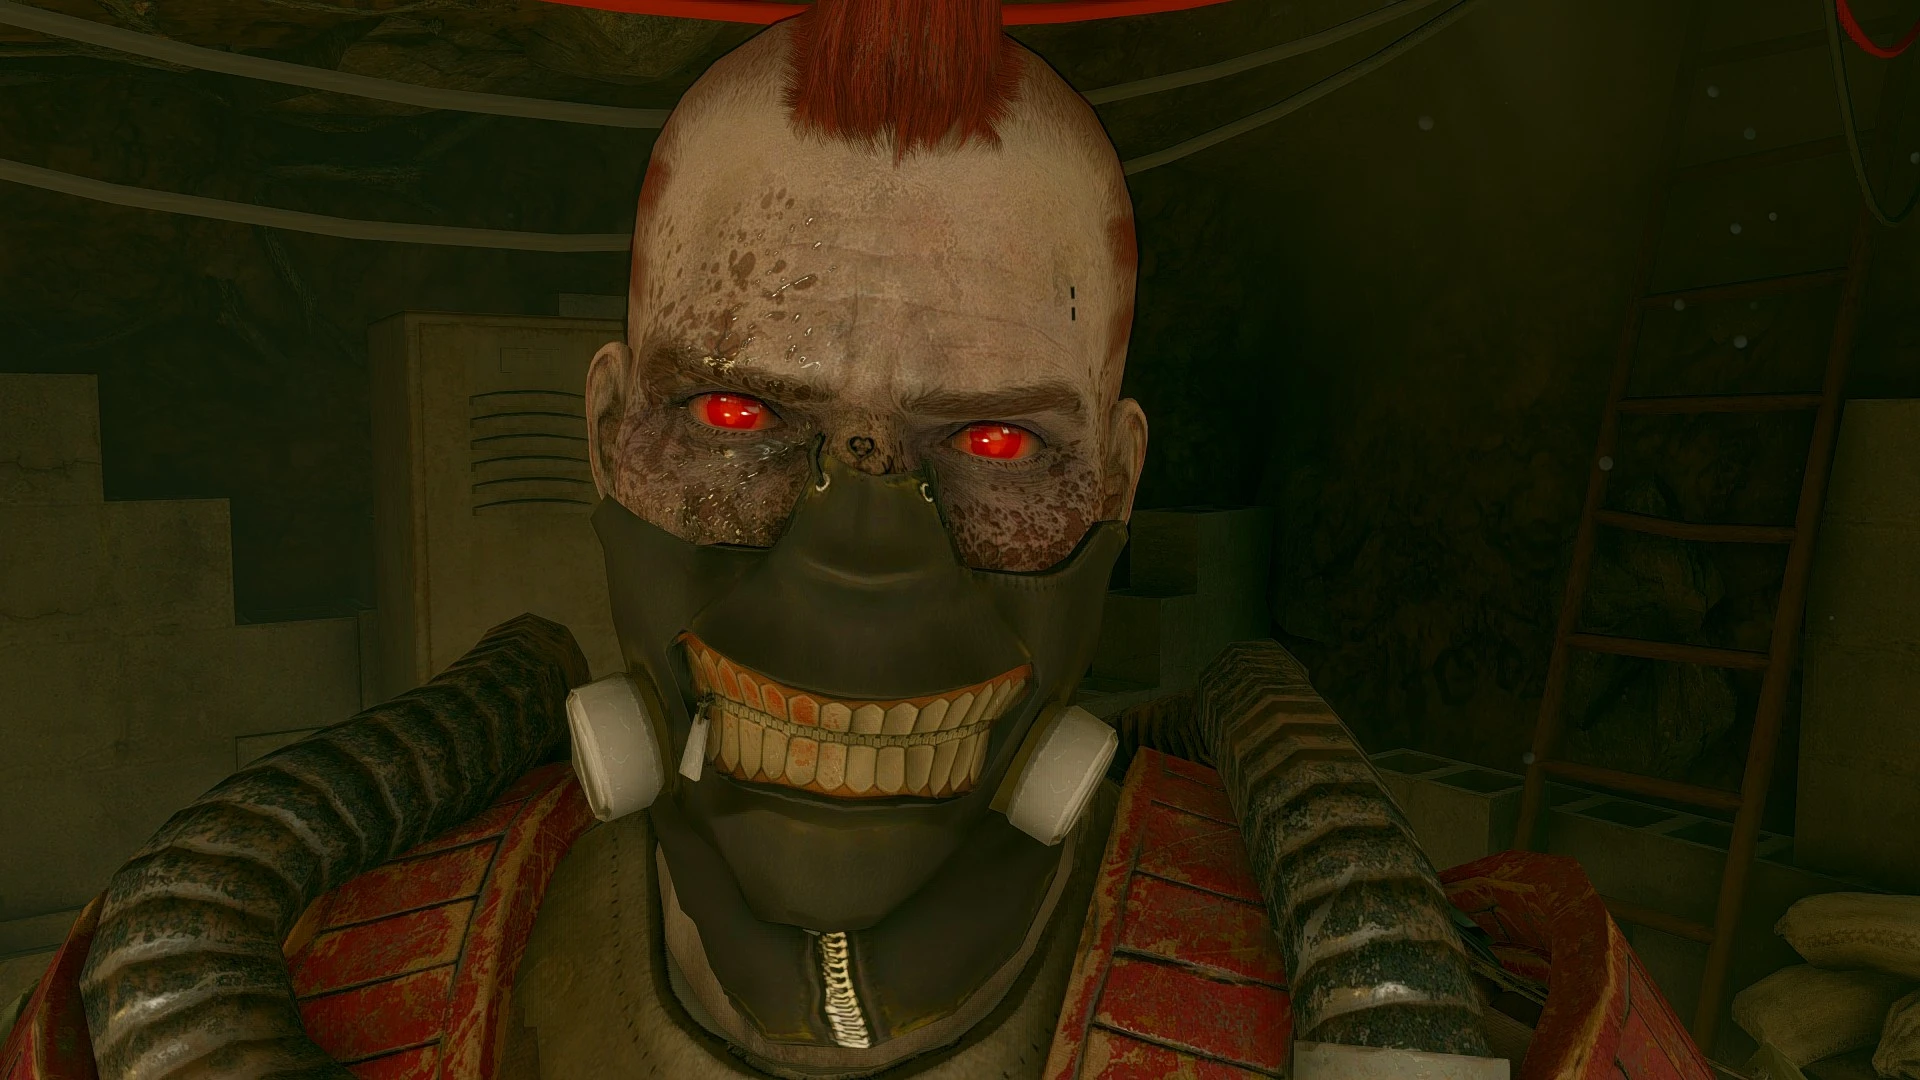 Tokyo Ghoul Kaneki s Mask v1 2 at Fallout 4 Nexus Mods 